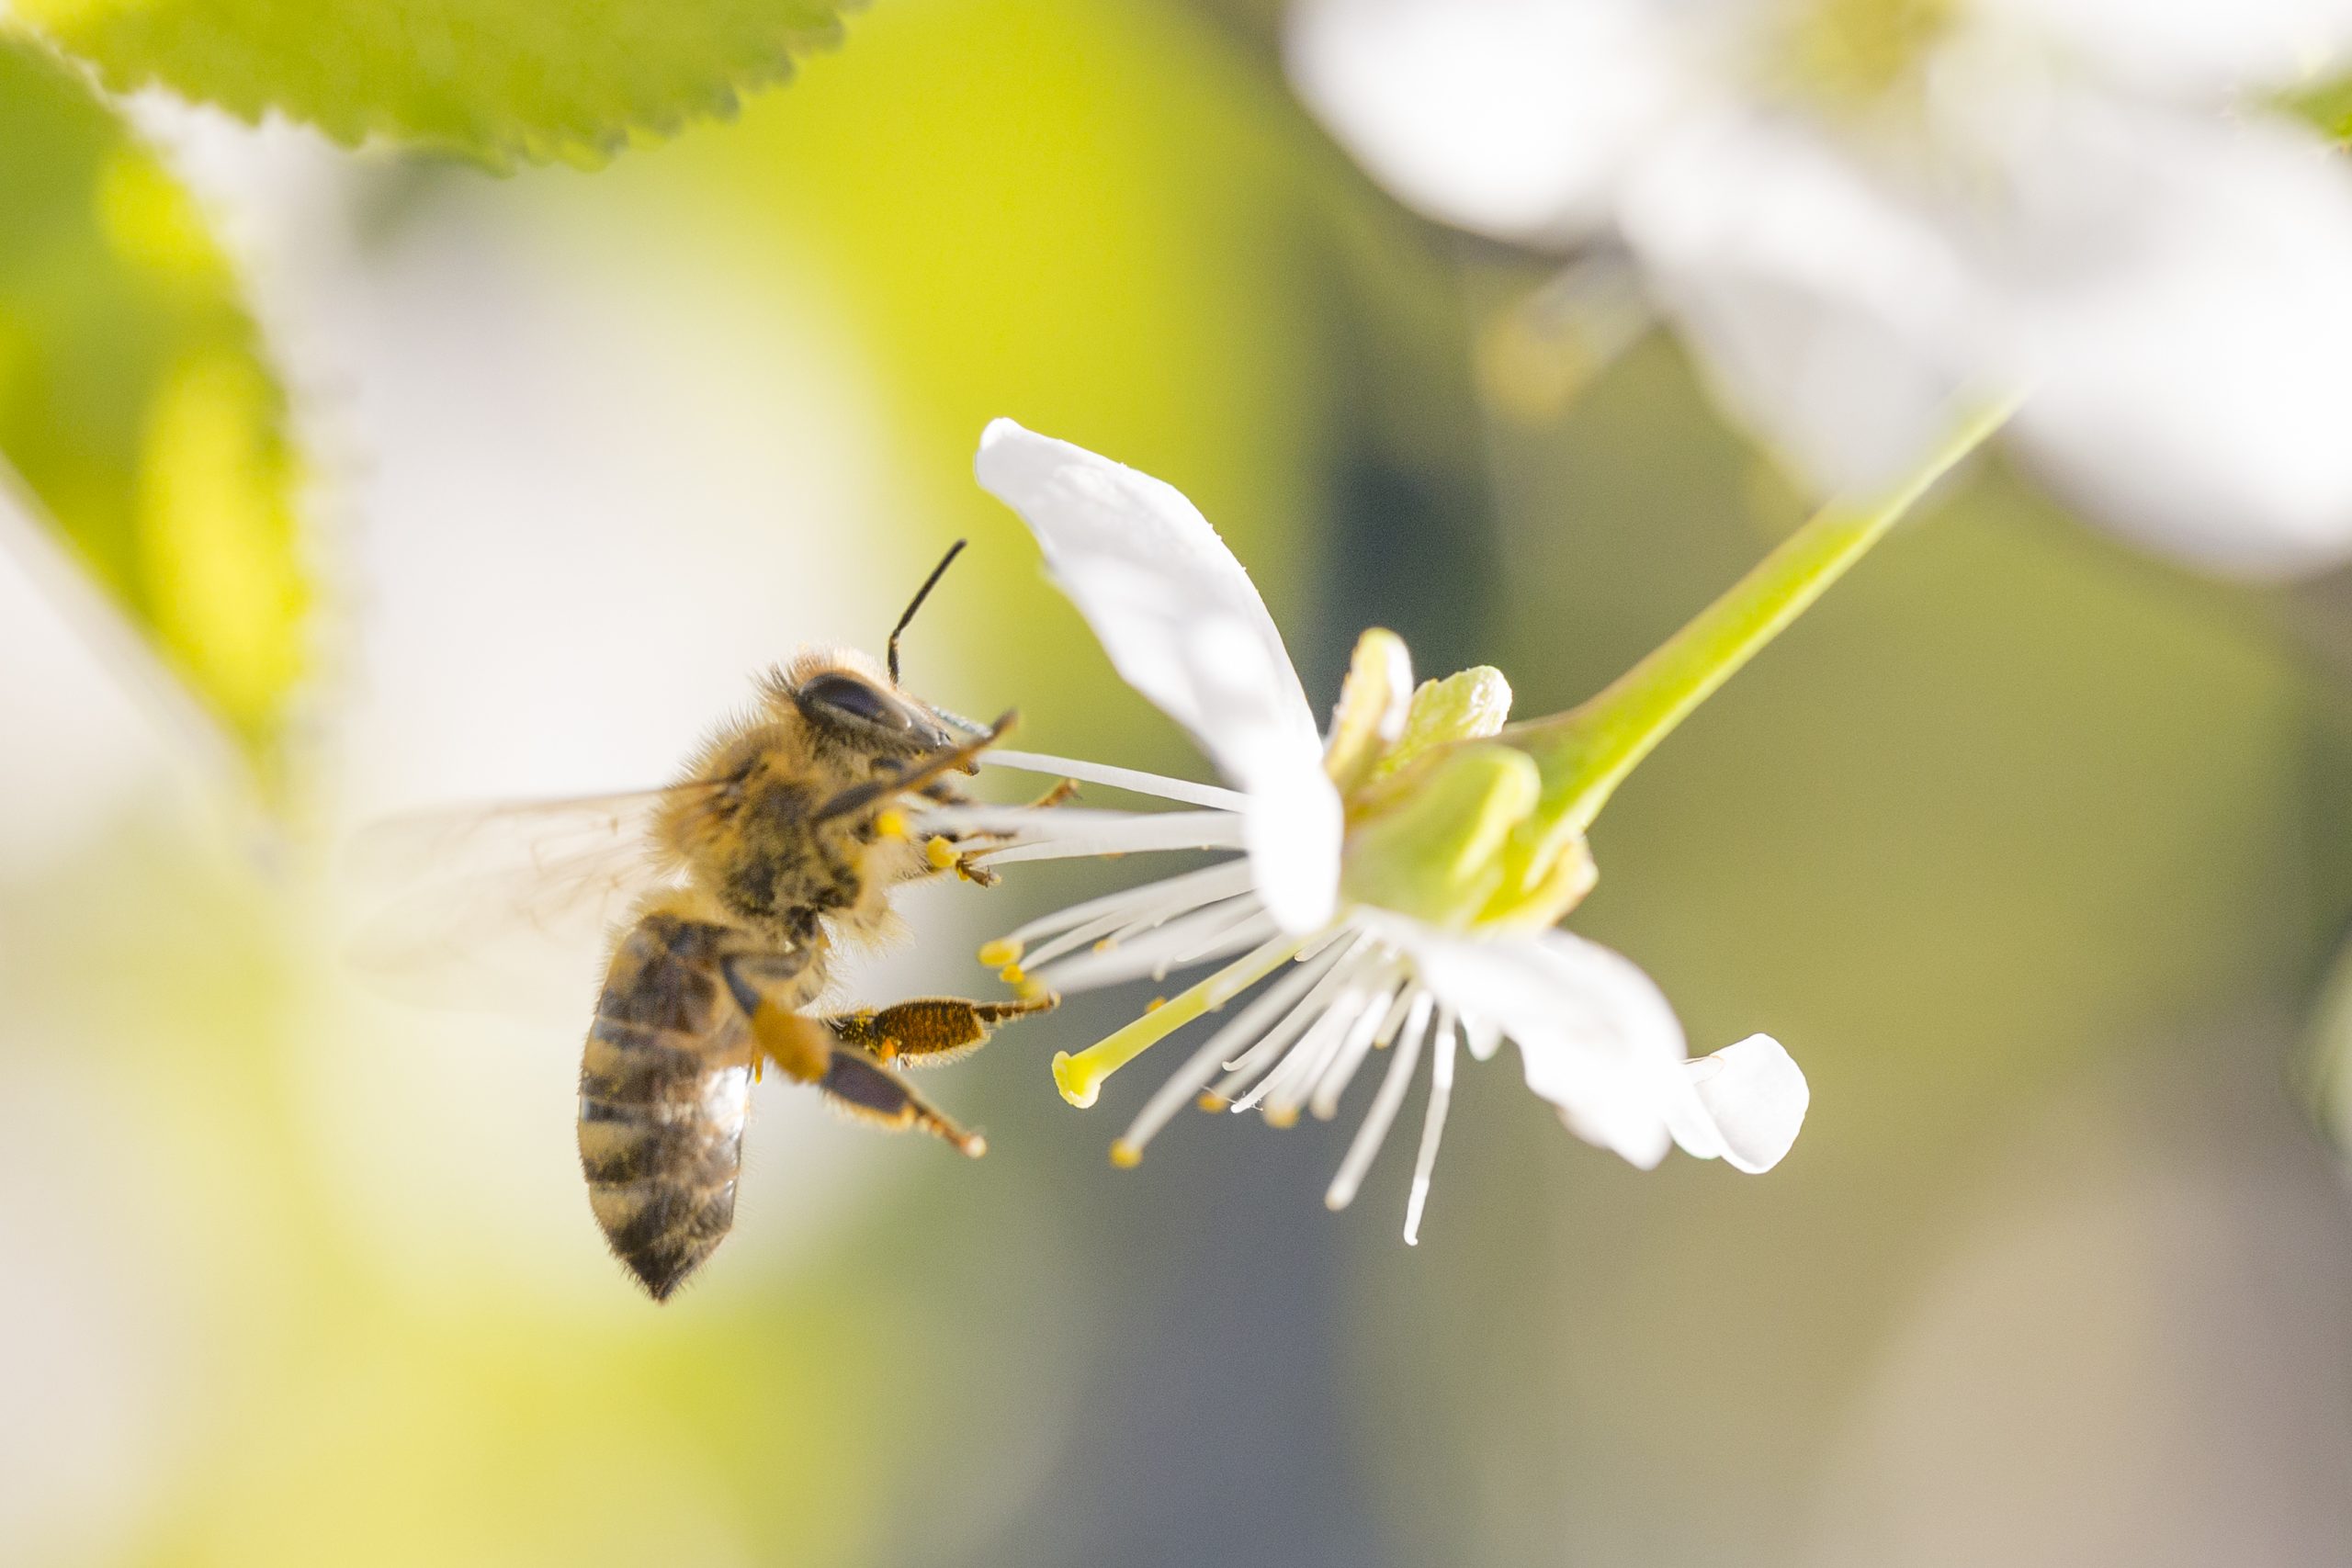 Honeybees are important pollinators.